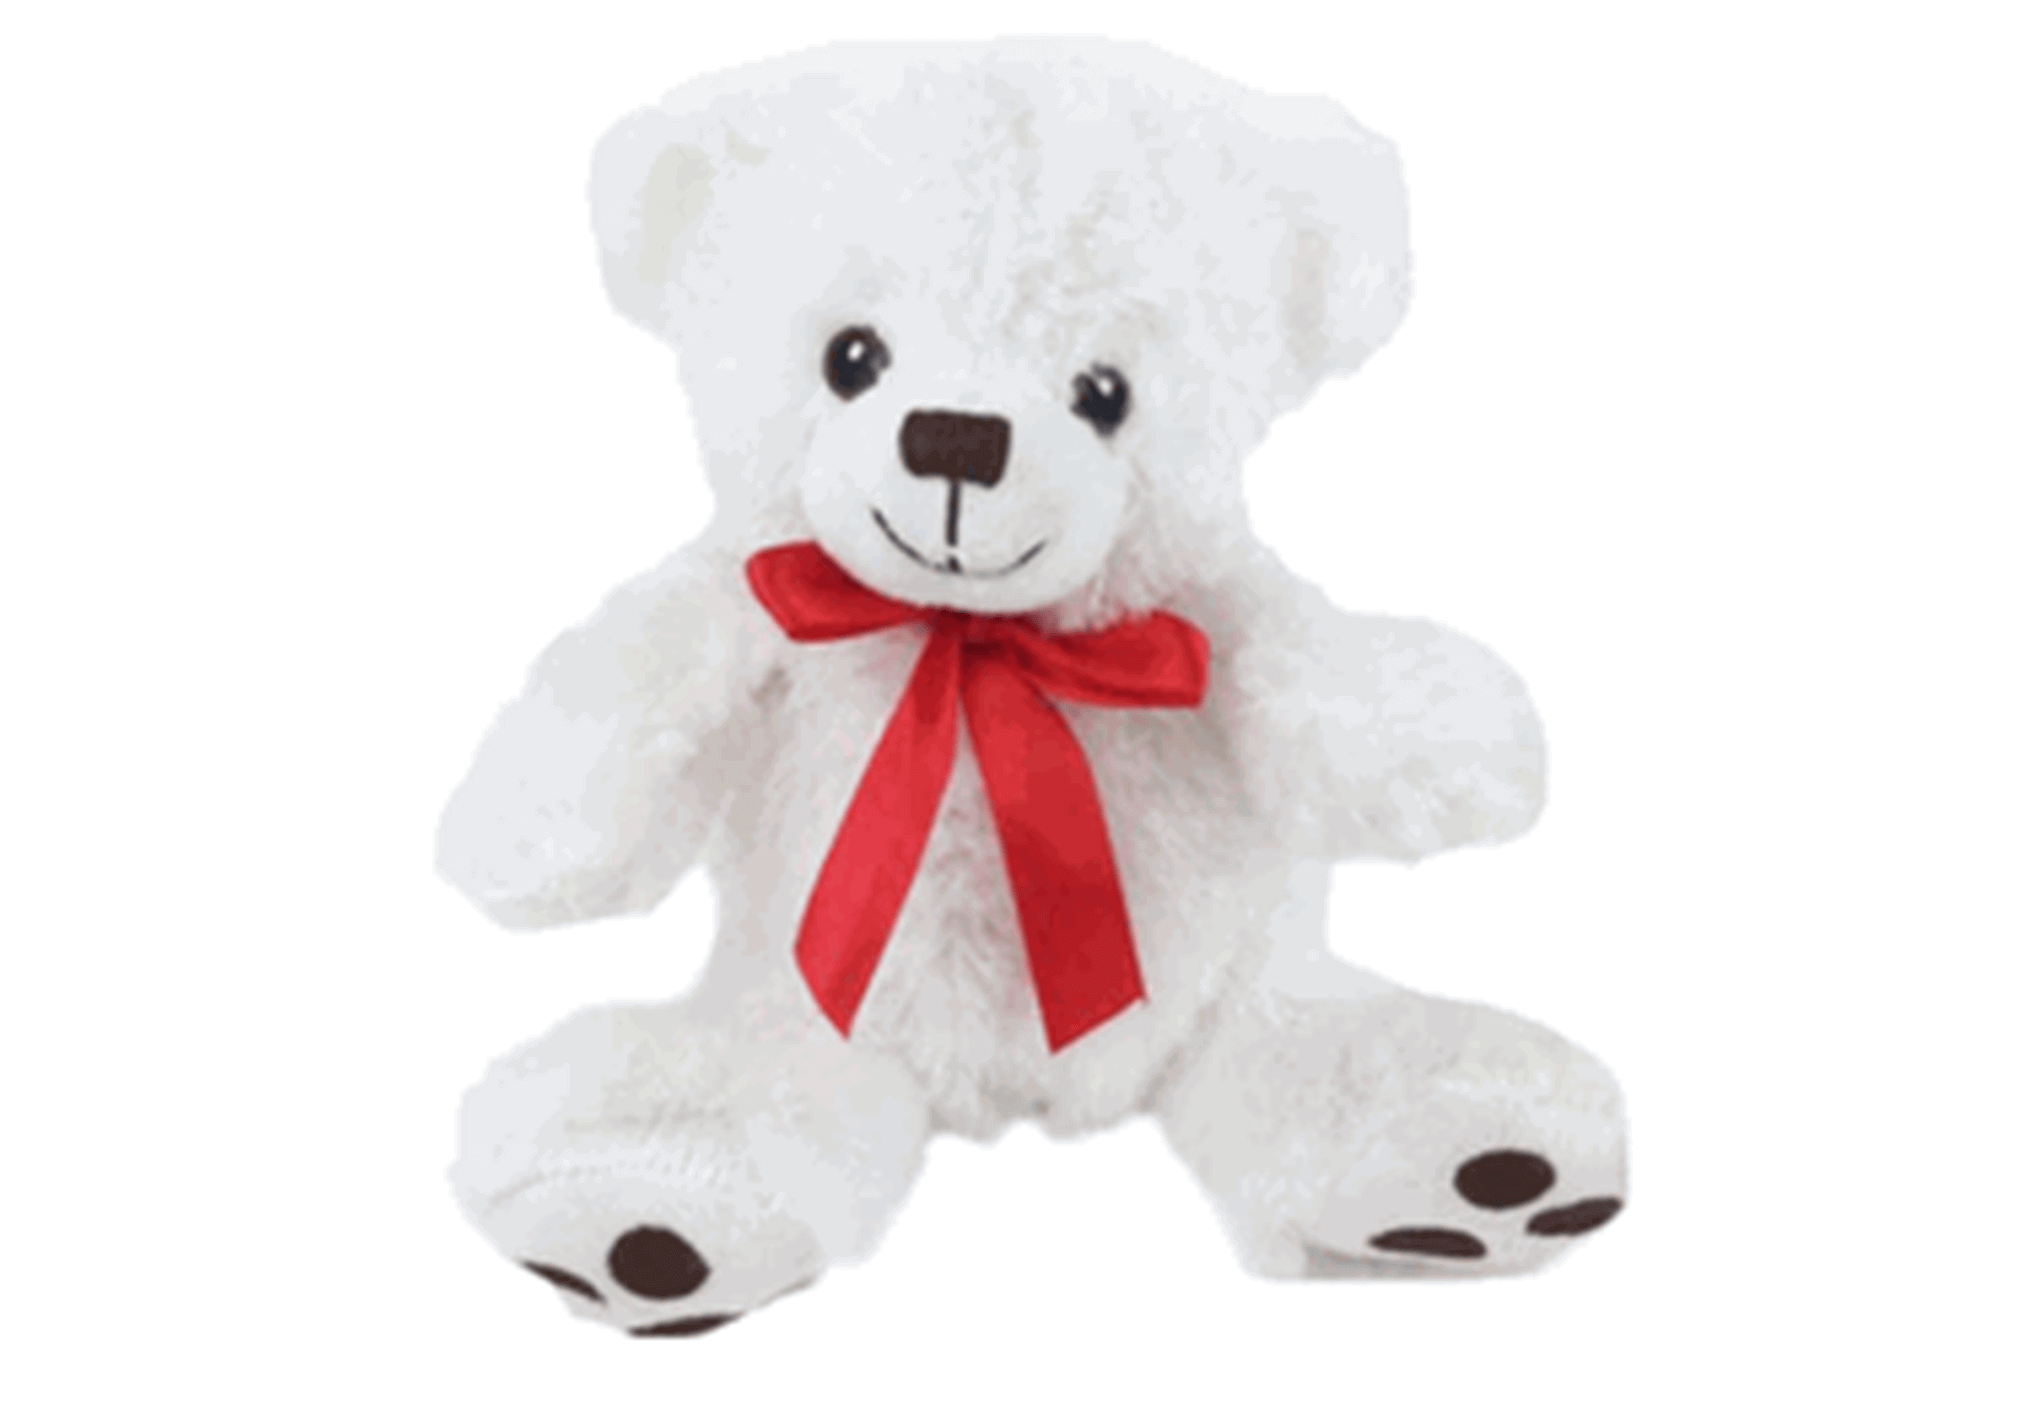 red white teddy bear